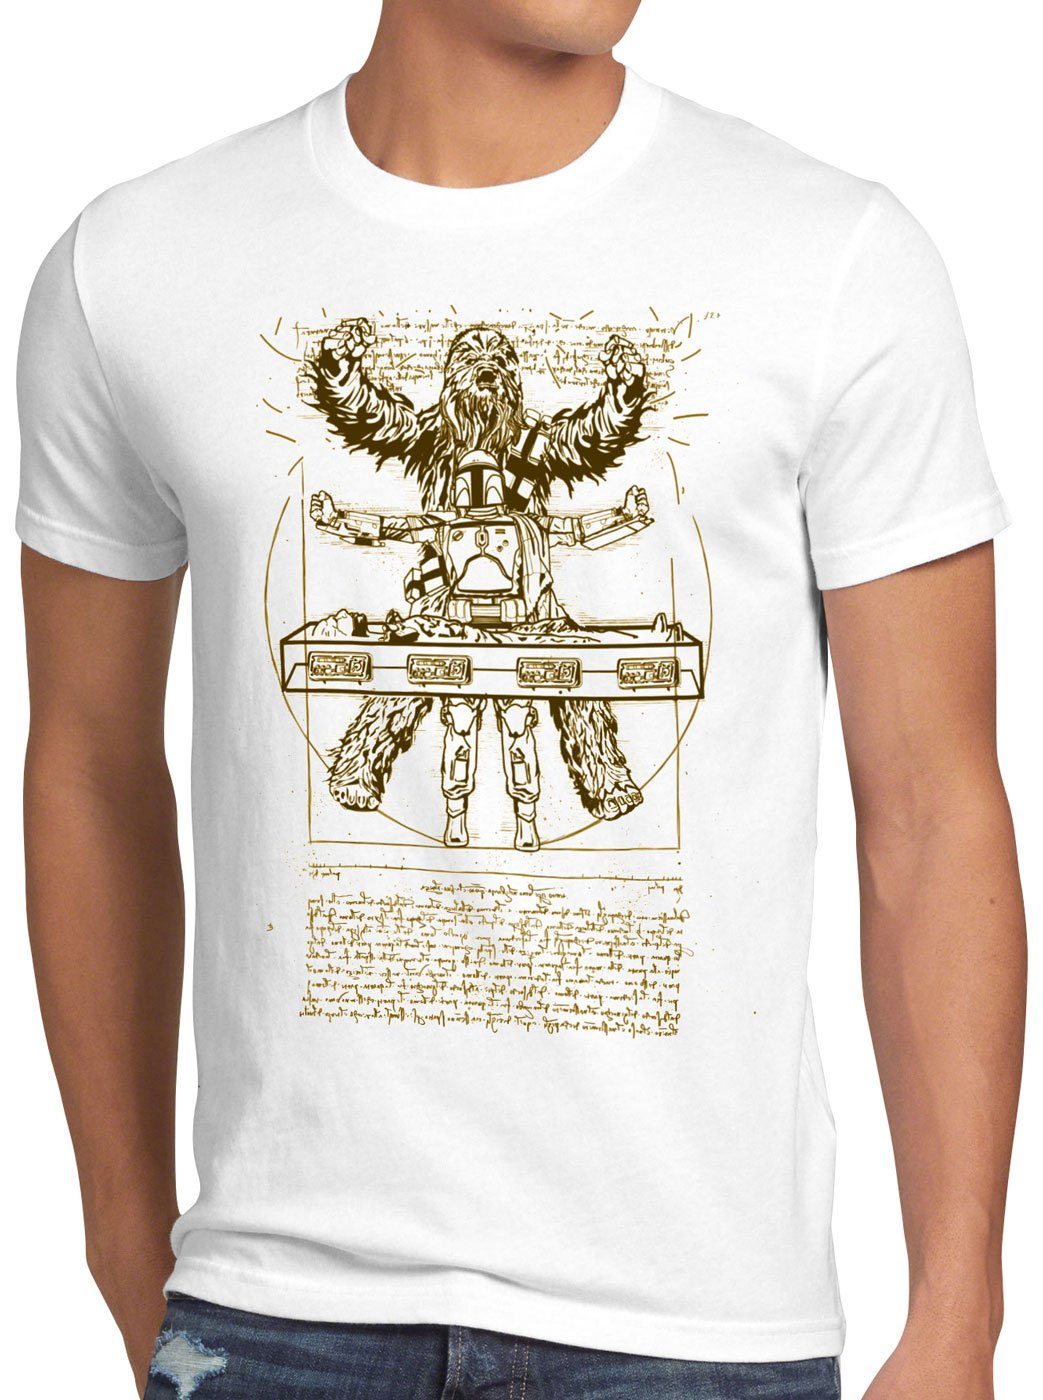 Print-Shirt Herren T-Shirt boba mandalorian fett weiß style3 Vitruvianischer Wookiee